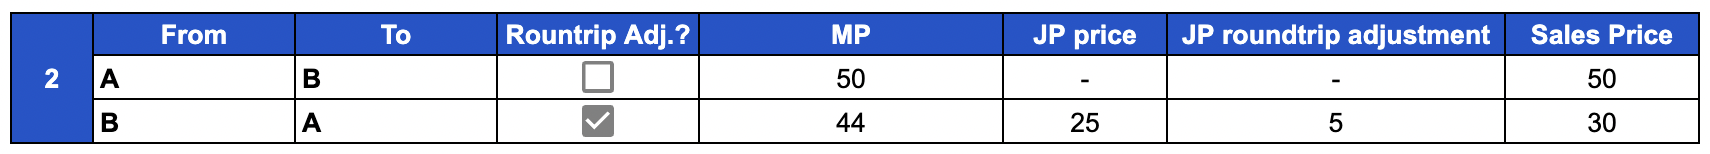 MP vs JP